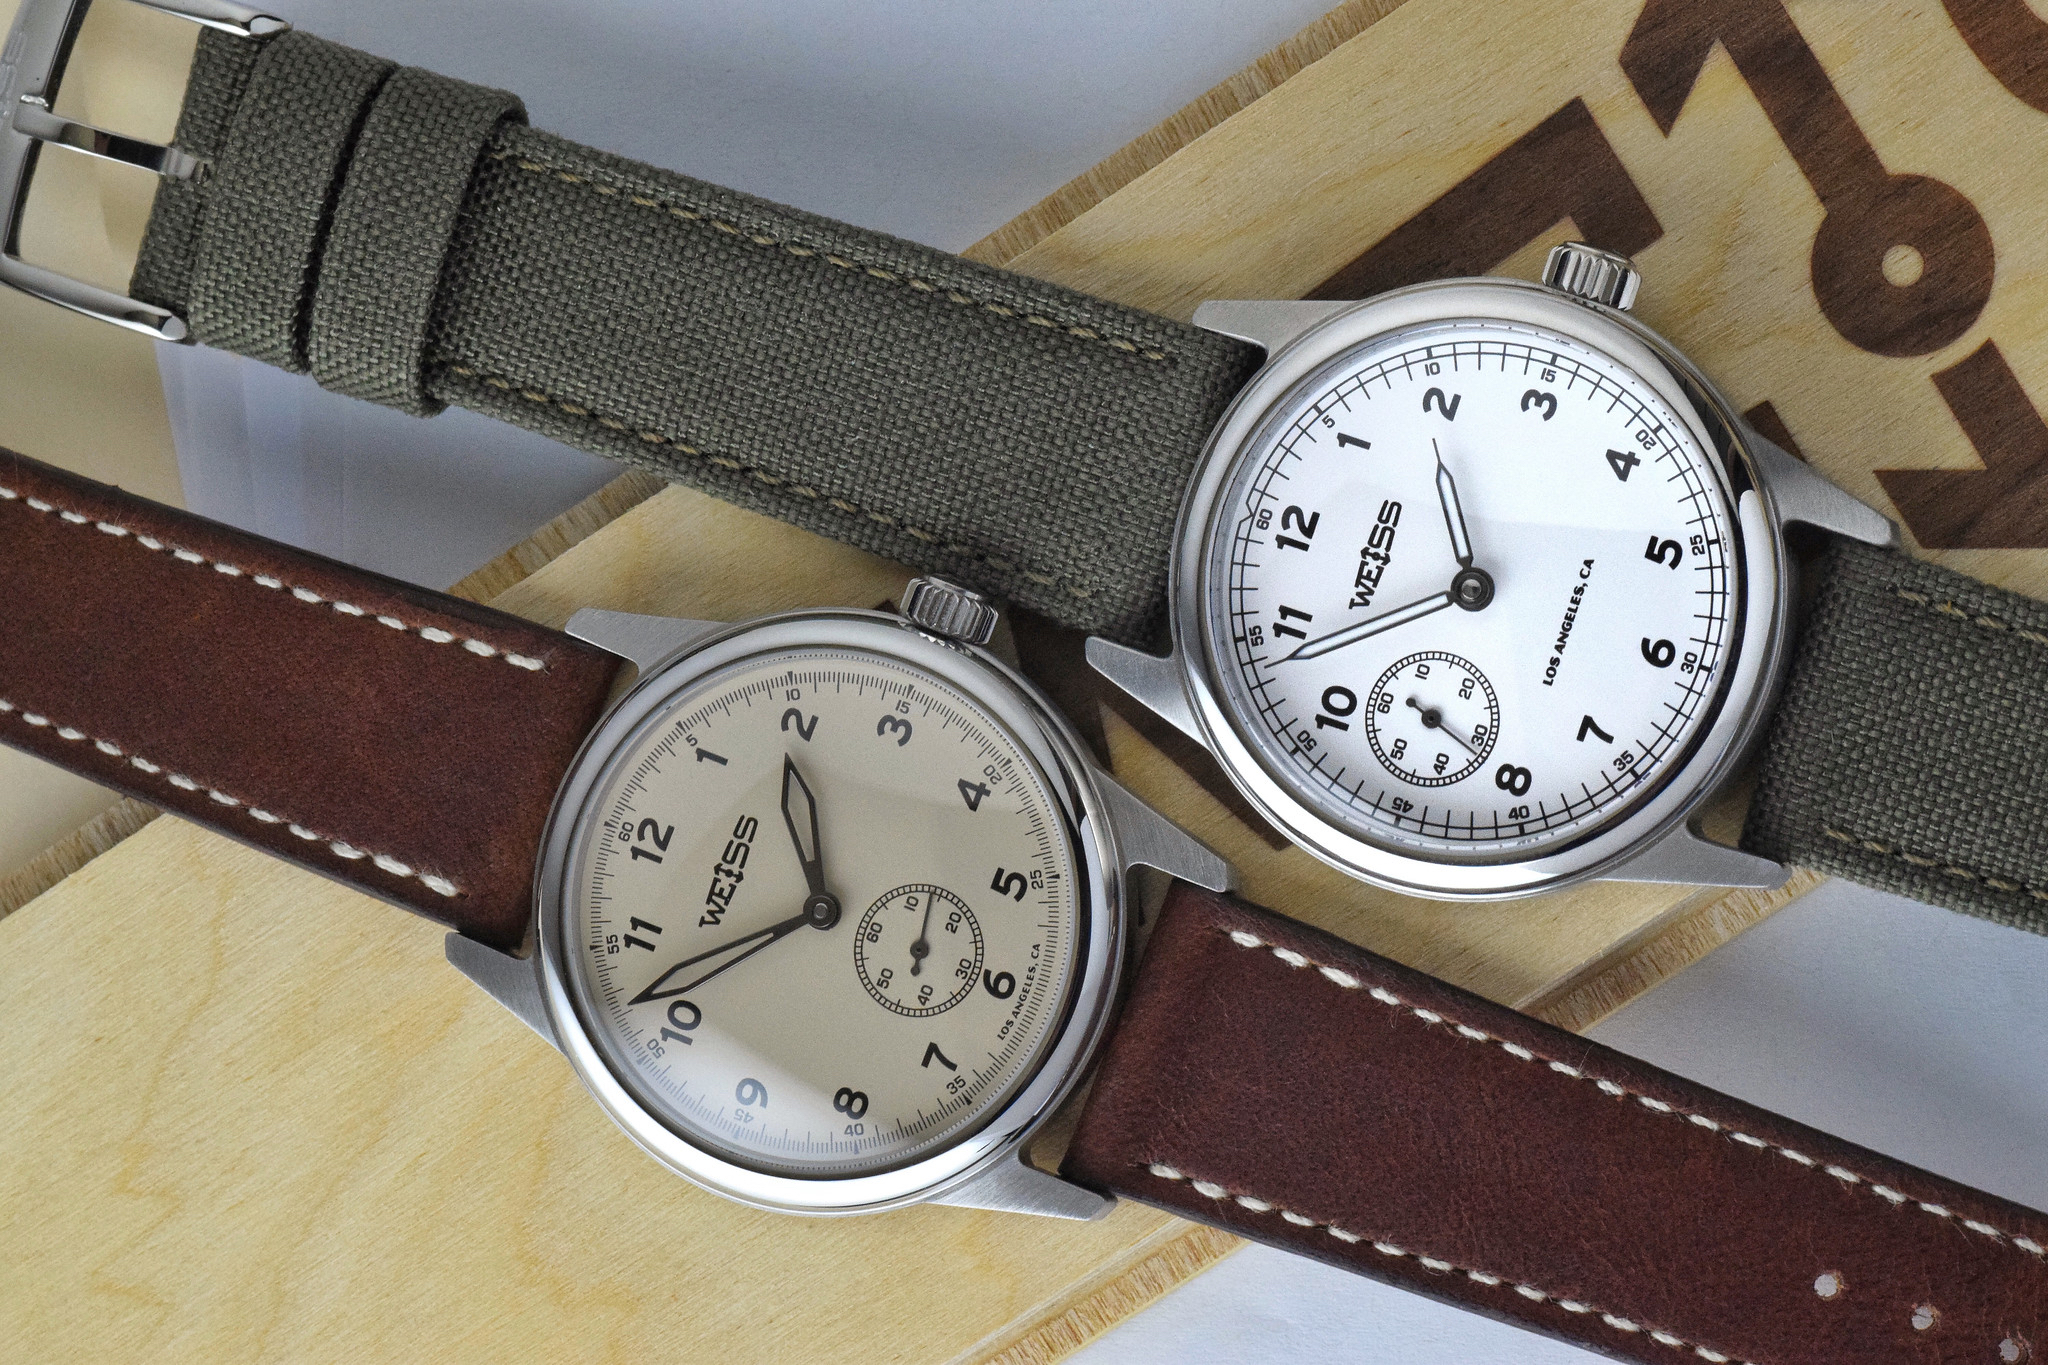 Weiss Field Watches